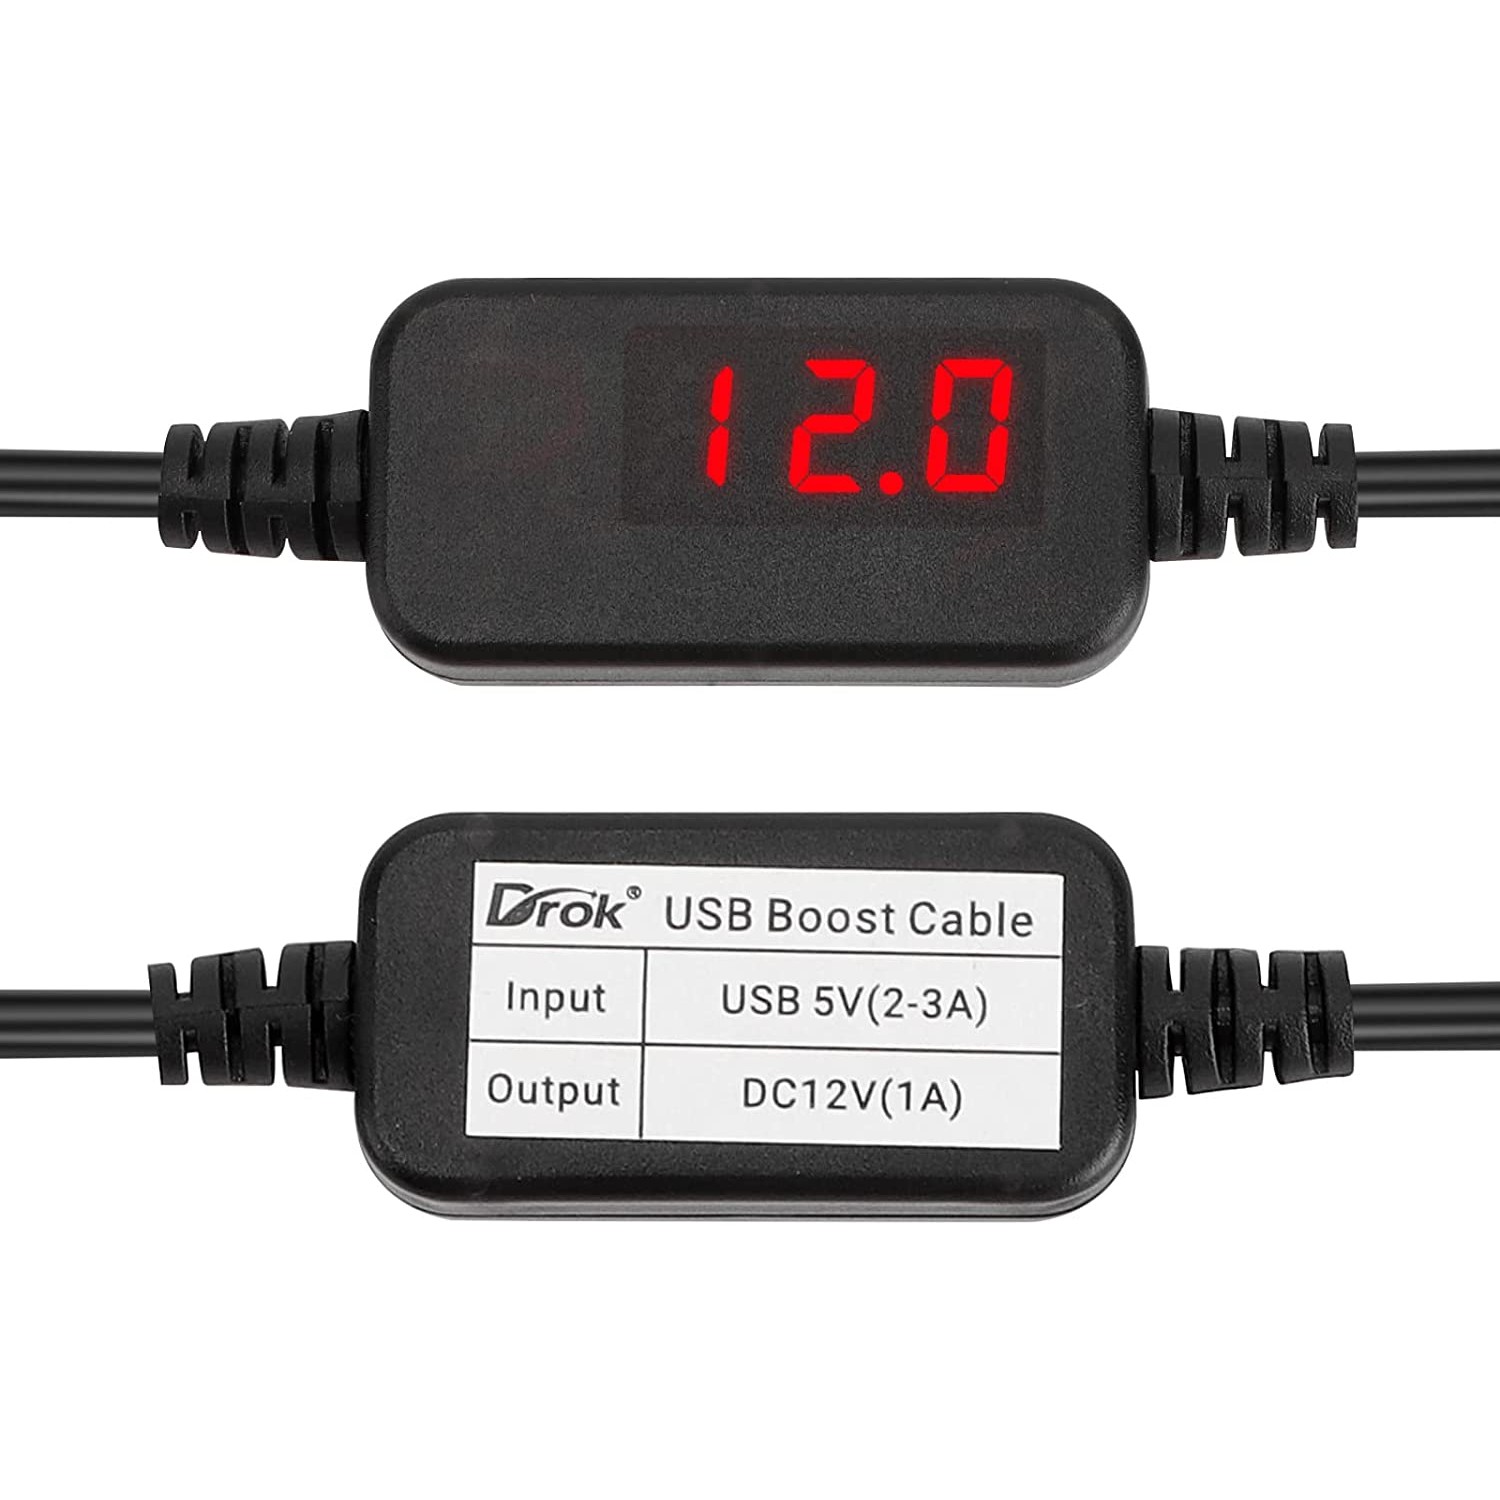 USB to 9v, DROK 5v to 9v USB Boost Converter, USB Cable DC 5v Step Up to  9v, 1.5A Power Regulator Line with 5.5mm Port 1.2 Meter Length